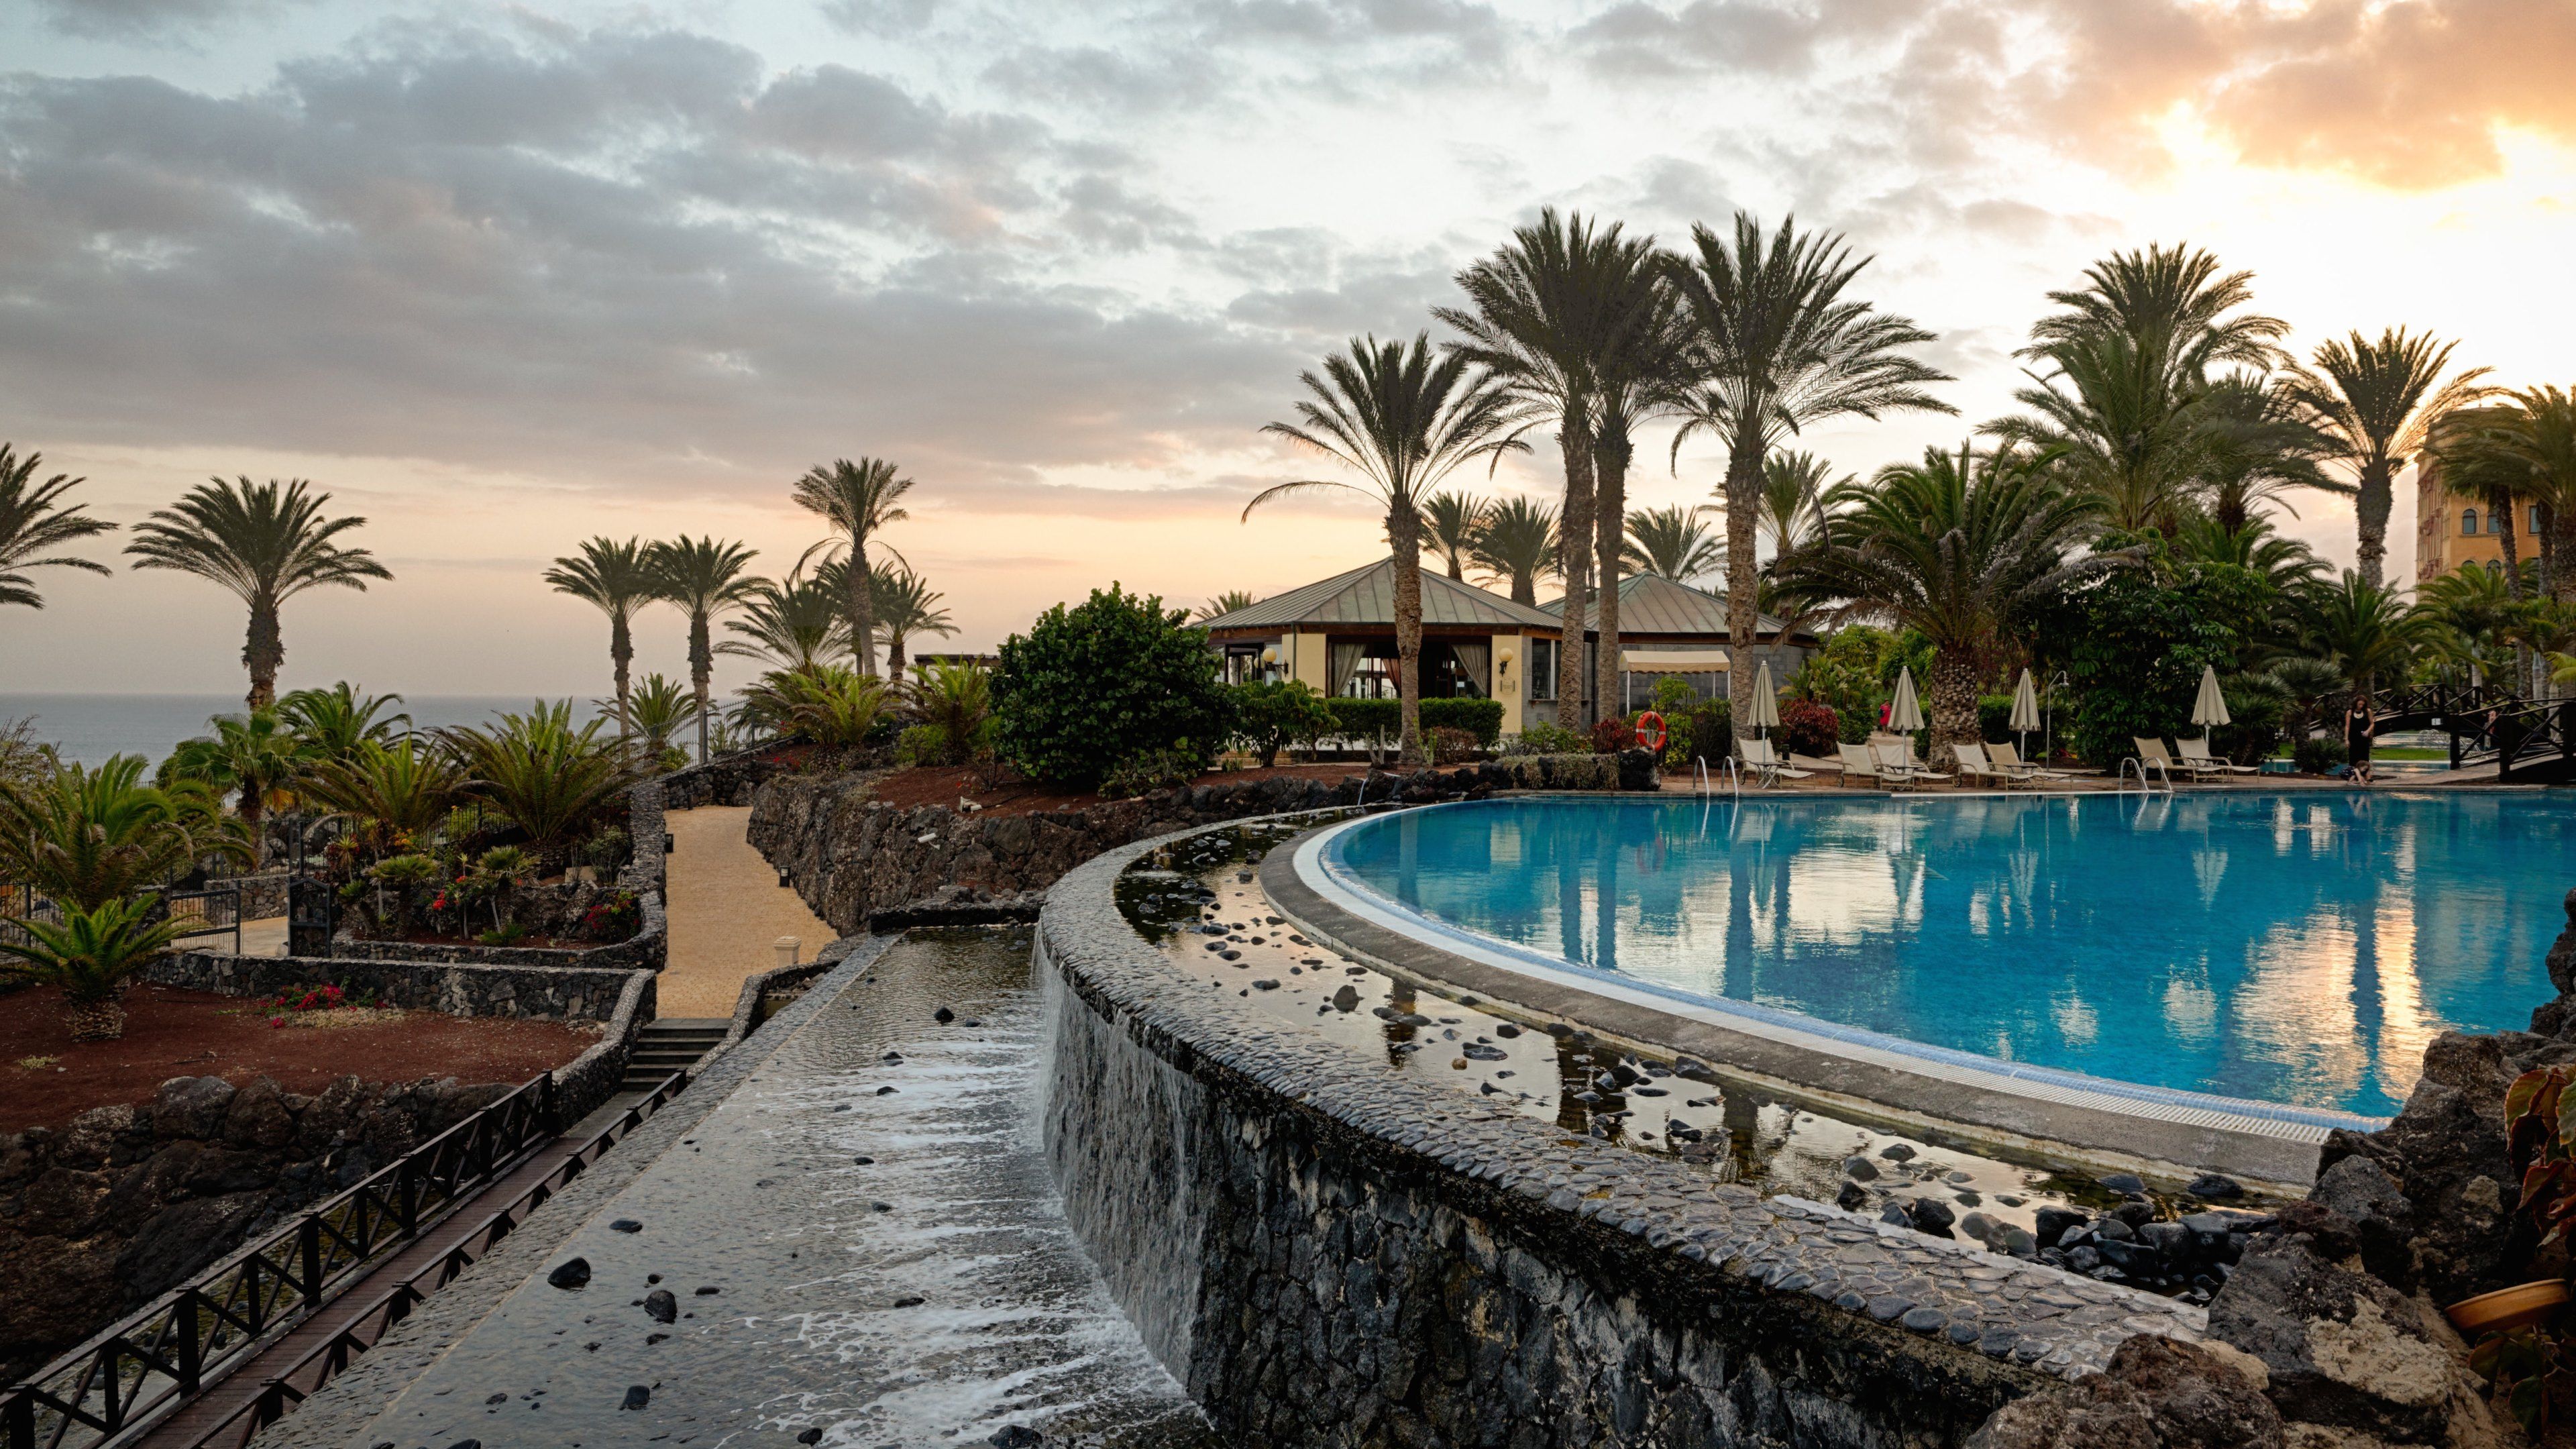 Canary Islands Resort. Invictus Travel Destinations